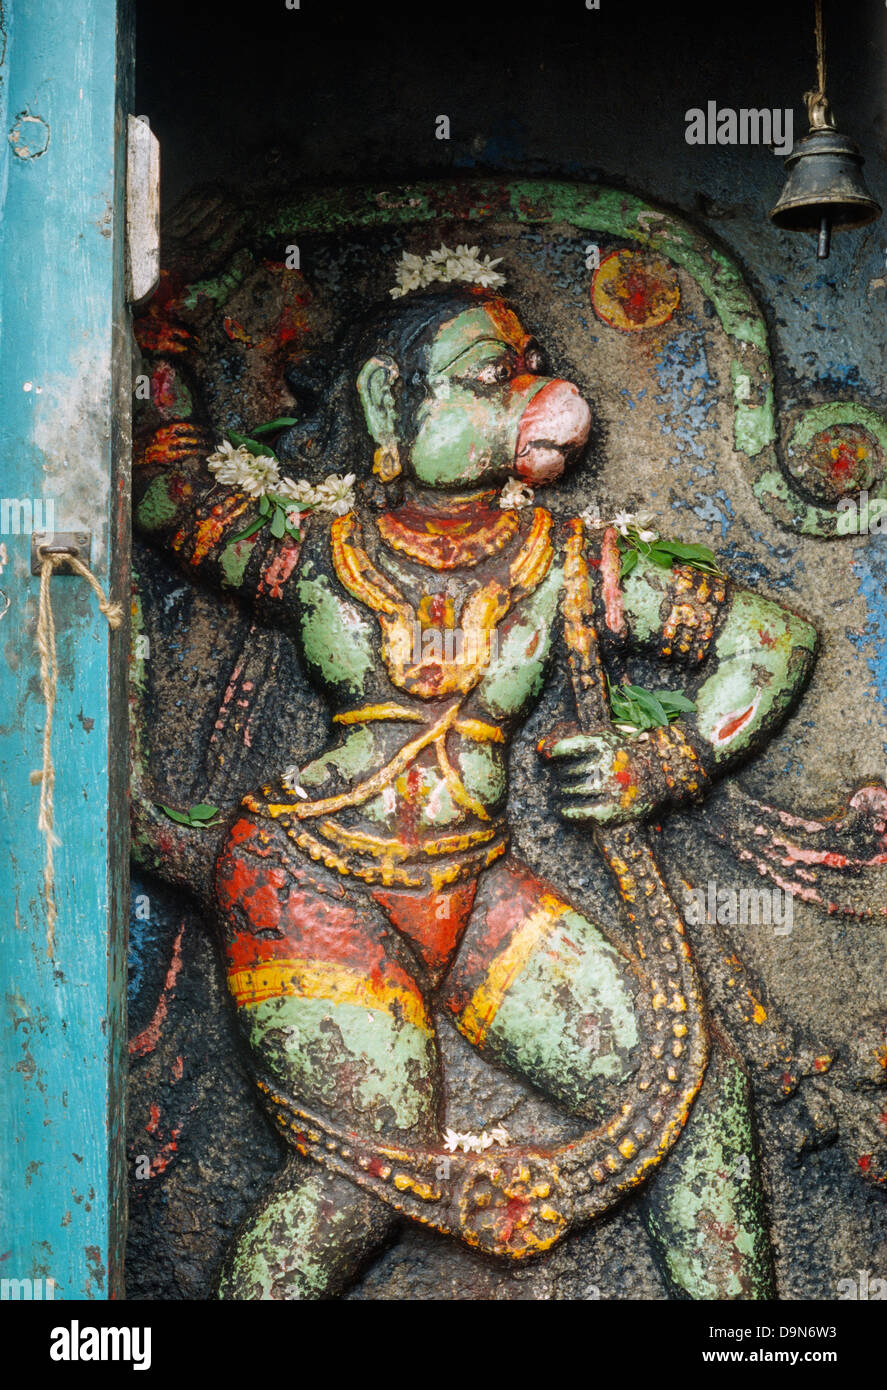 Sculpture of the Hindu monkey god Hanuman in a shrine, India Stock ...